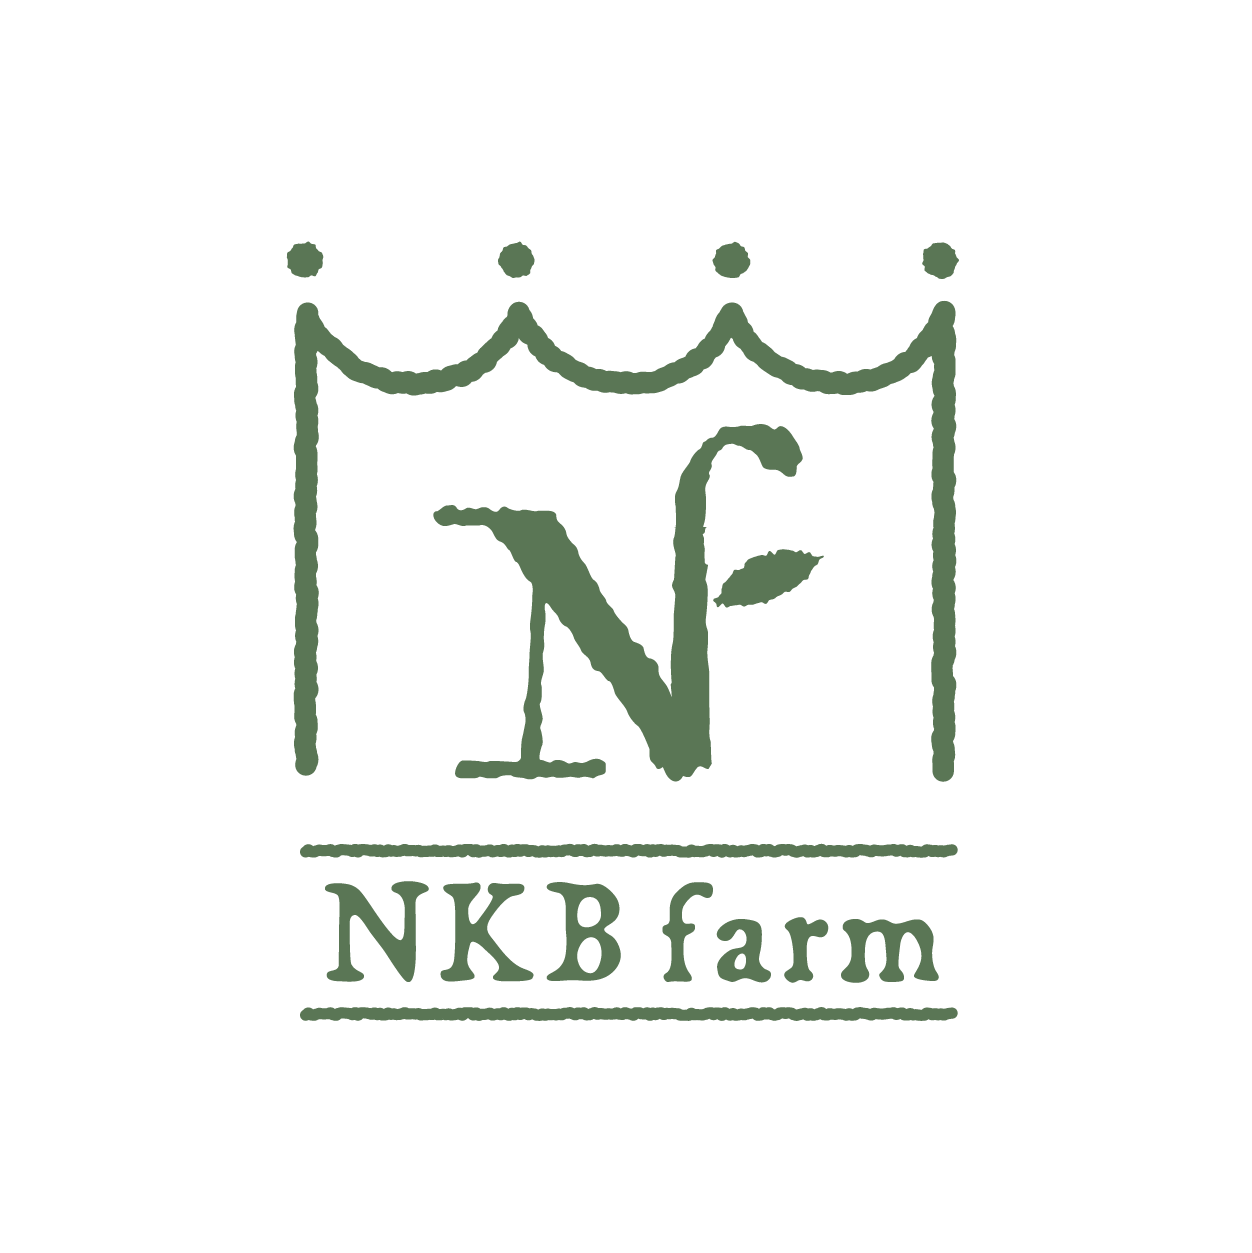 NKB farm